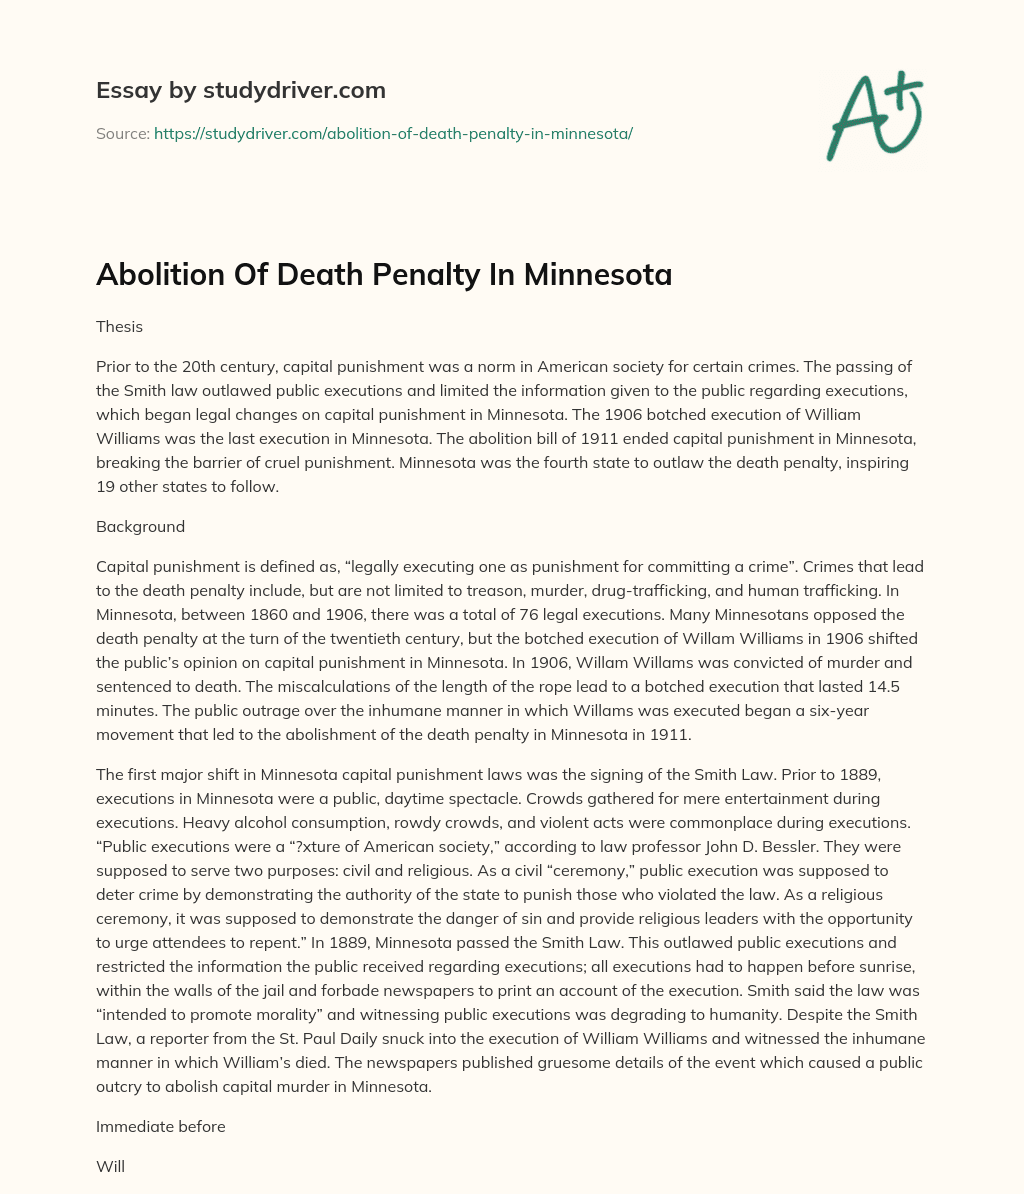 Abolition of Death Penalty in Minnesota essay